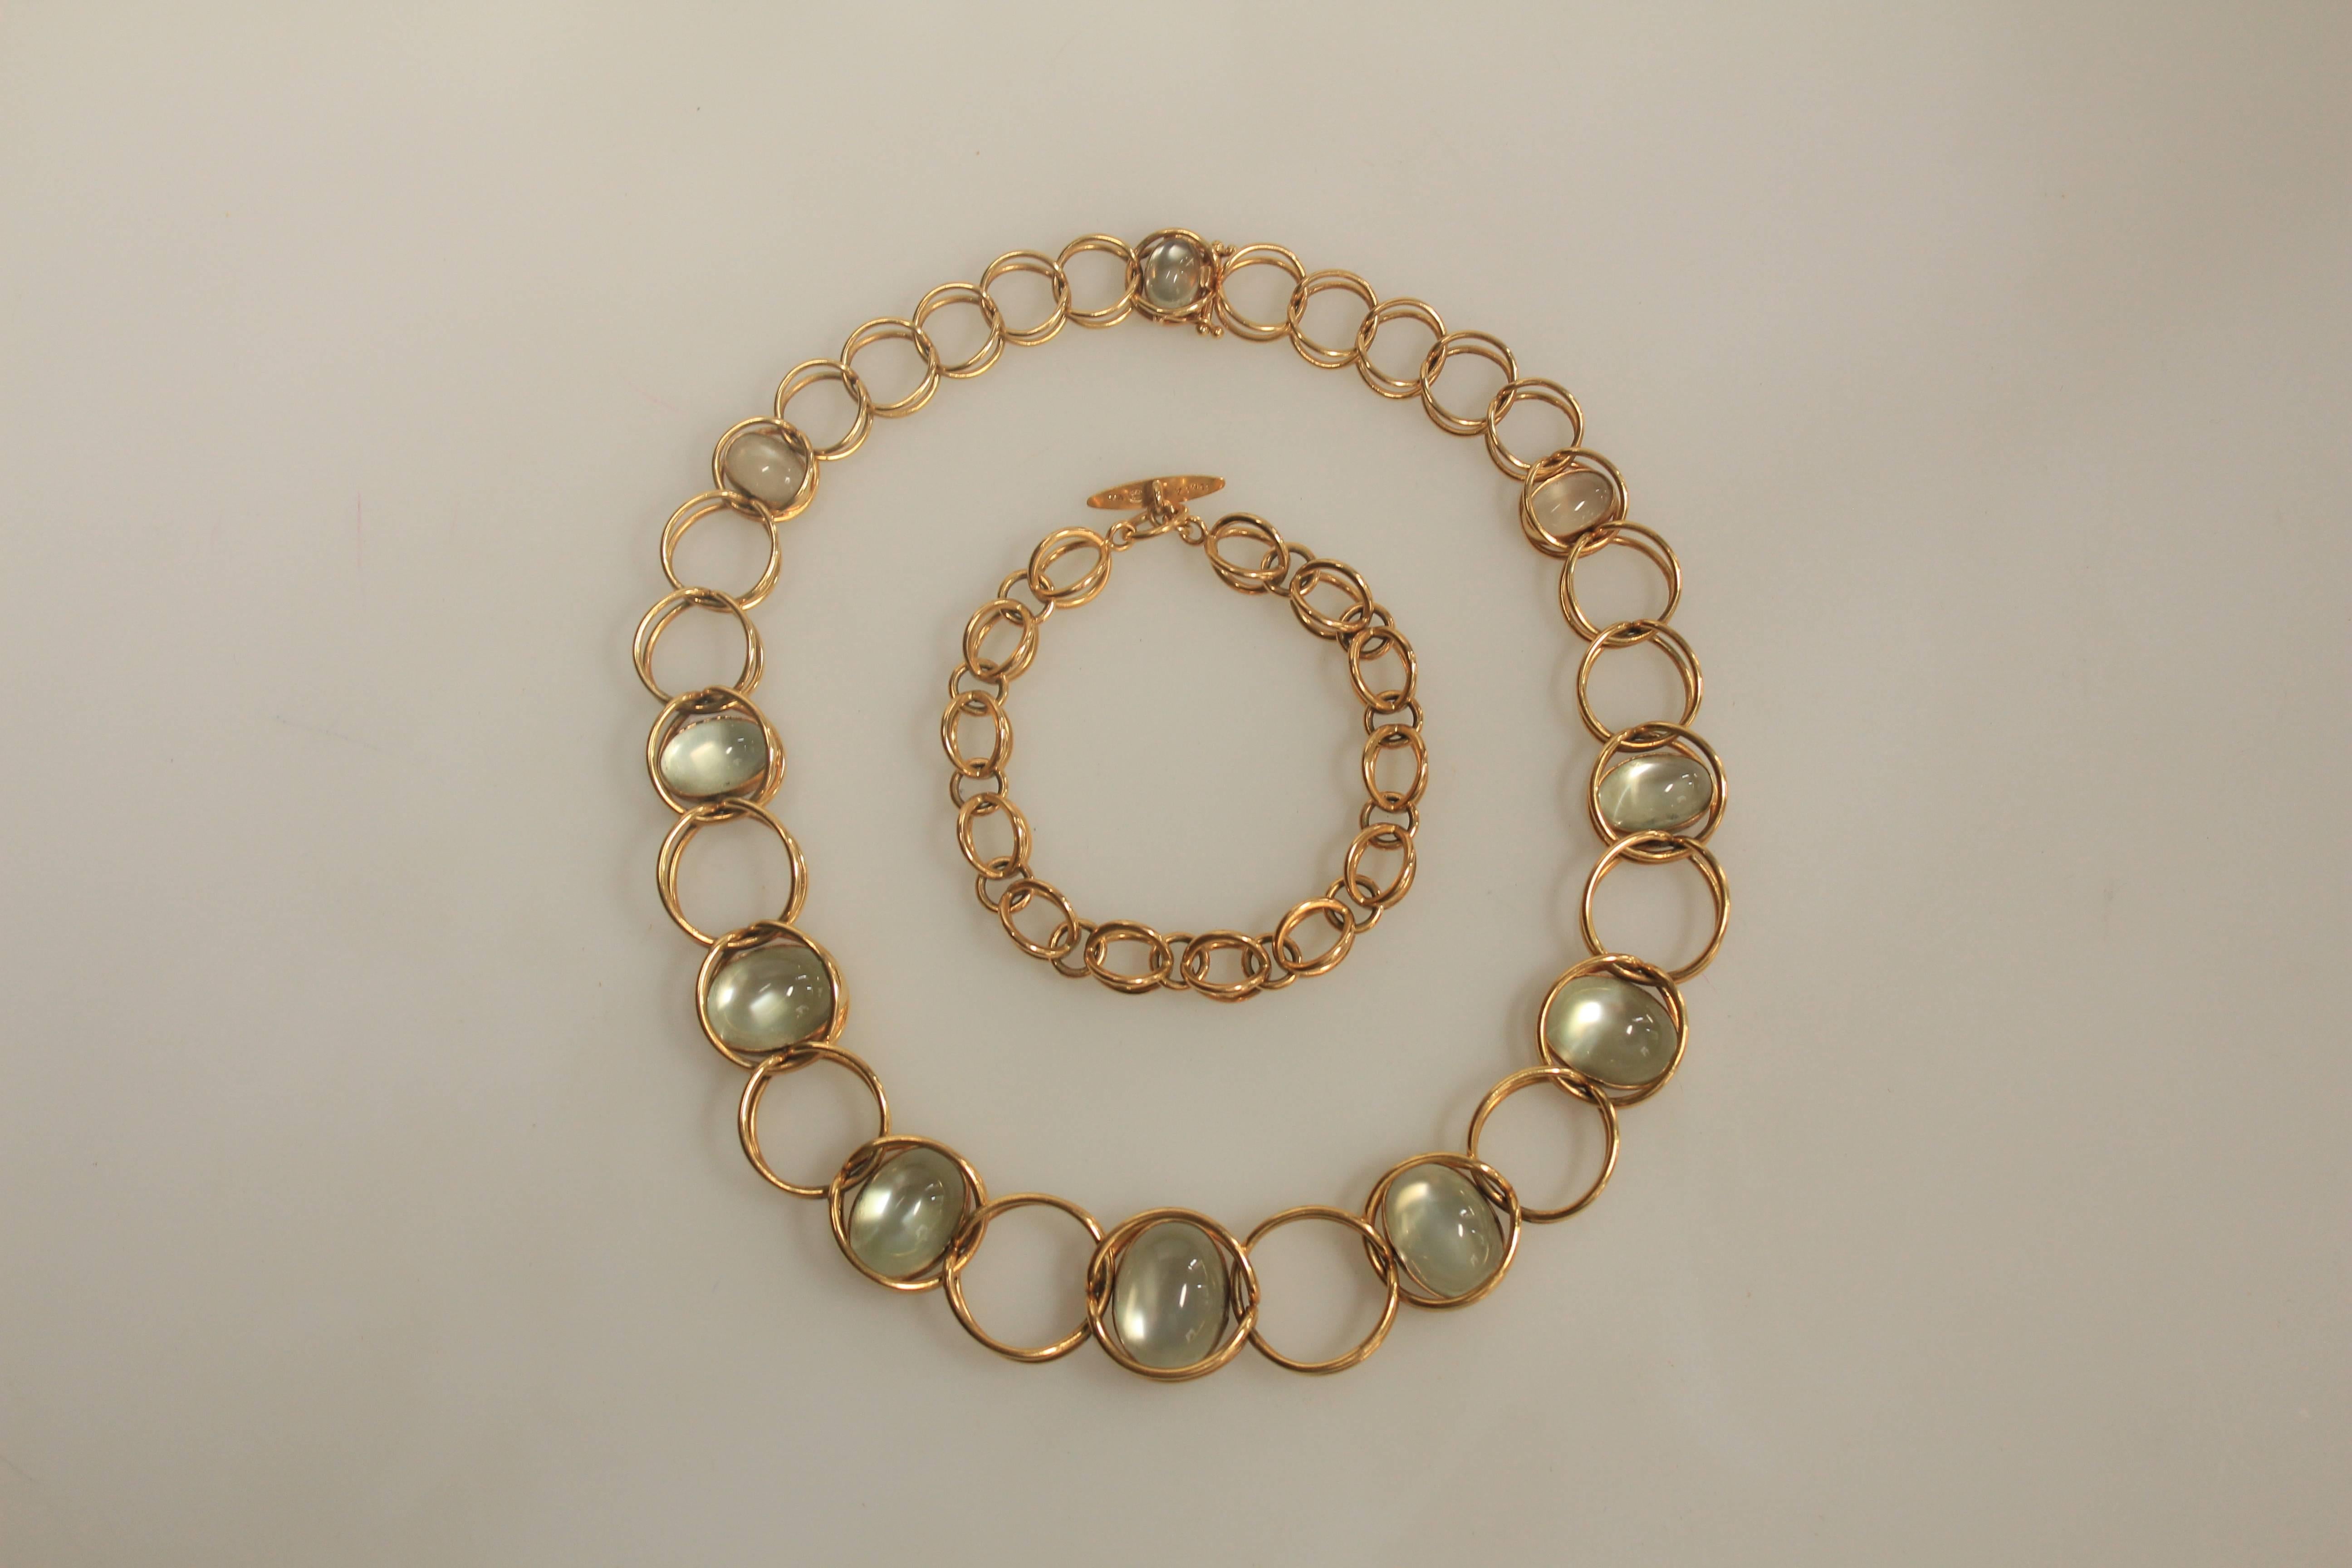 Georg Jensen 18K Gold and Moonstone Necklace & Bracelet Designed by Axel Jensen For Sale 9